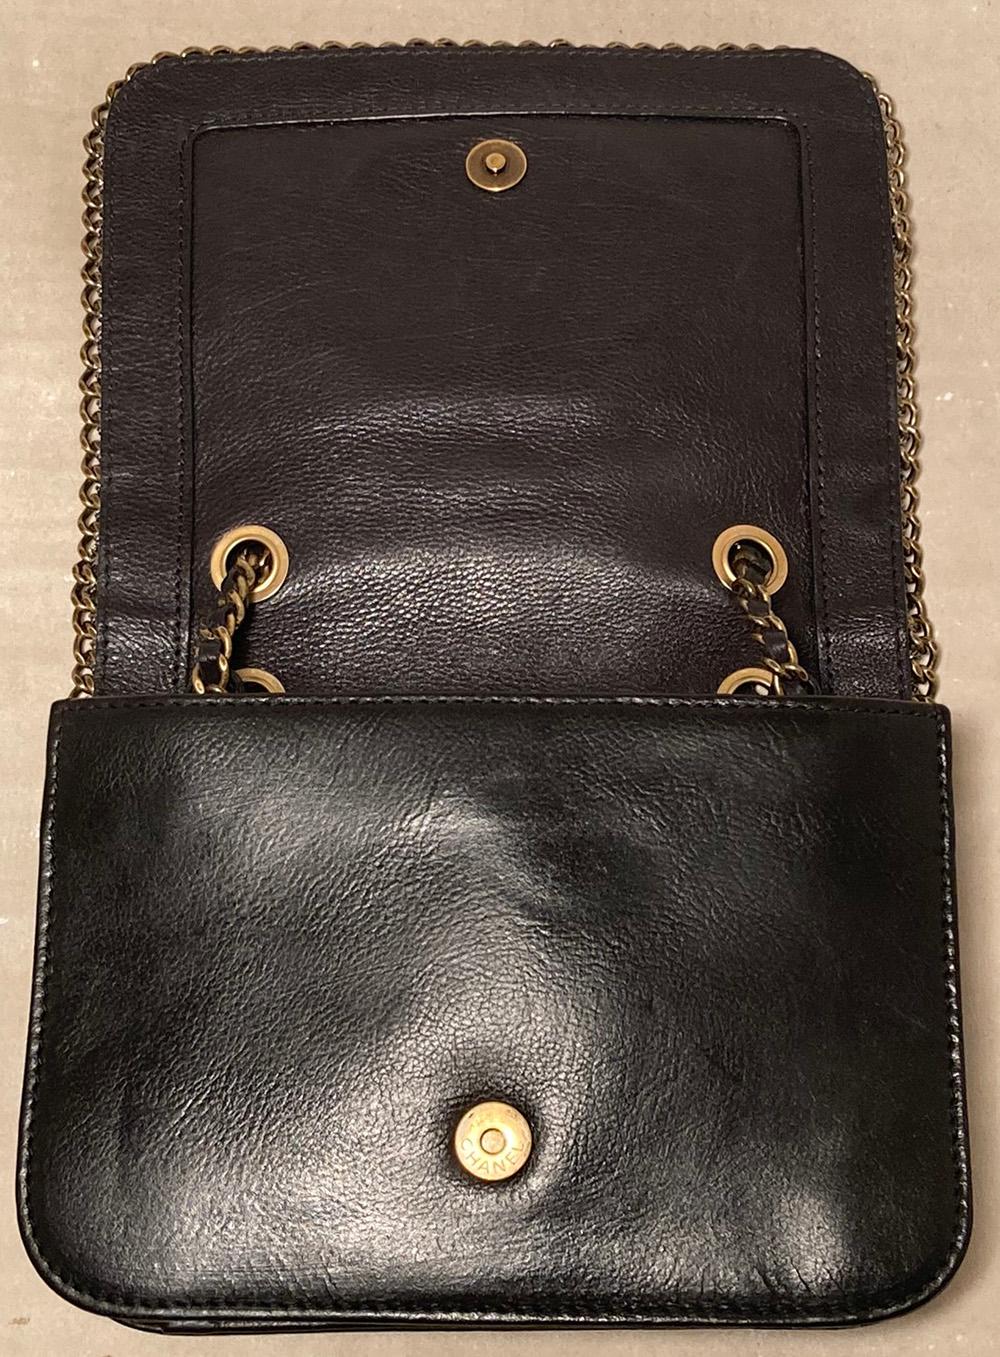 RARE Chanel Gripoix Beaded Black Leather Chain Trim Classic Flap Bag 4